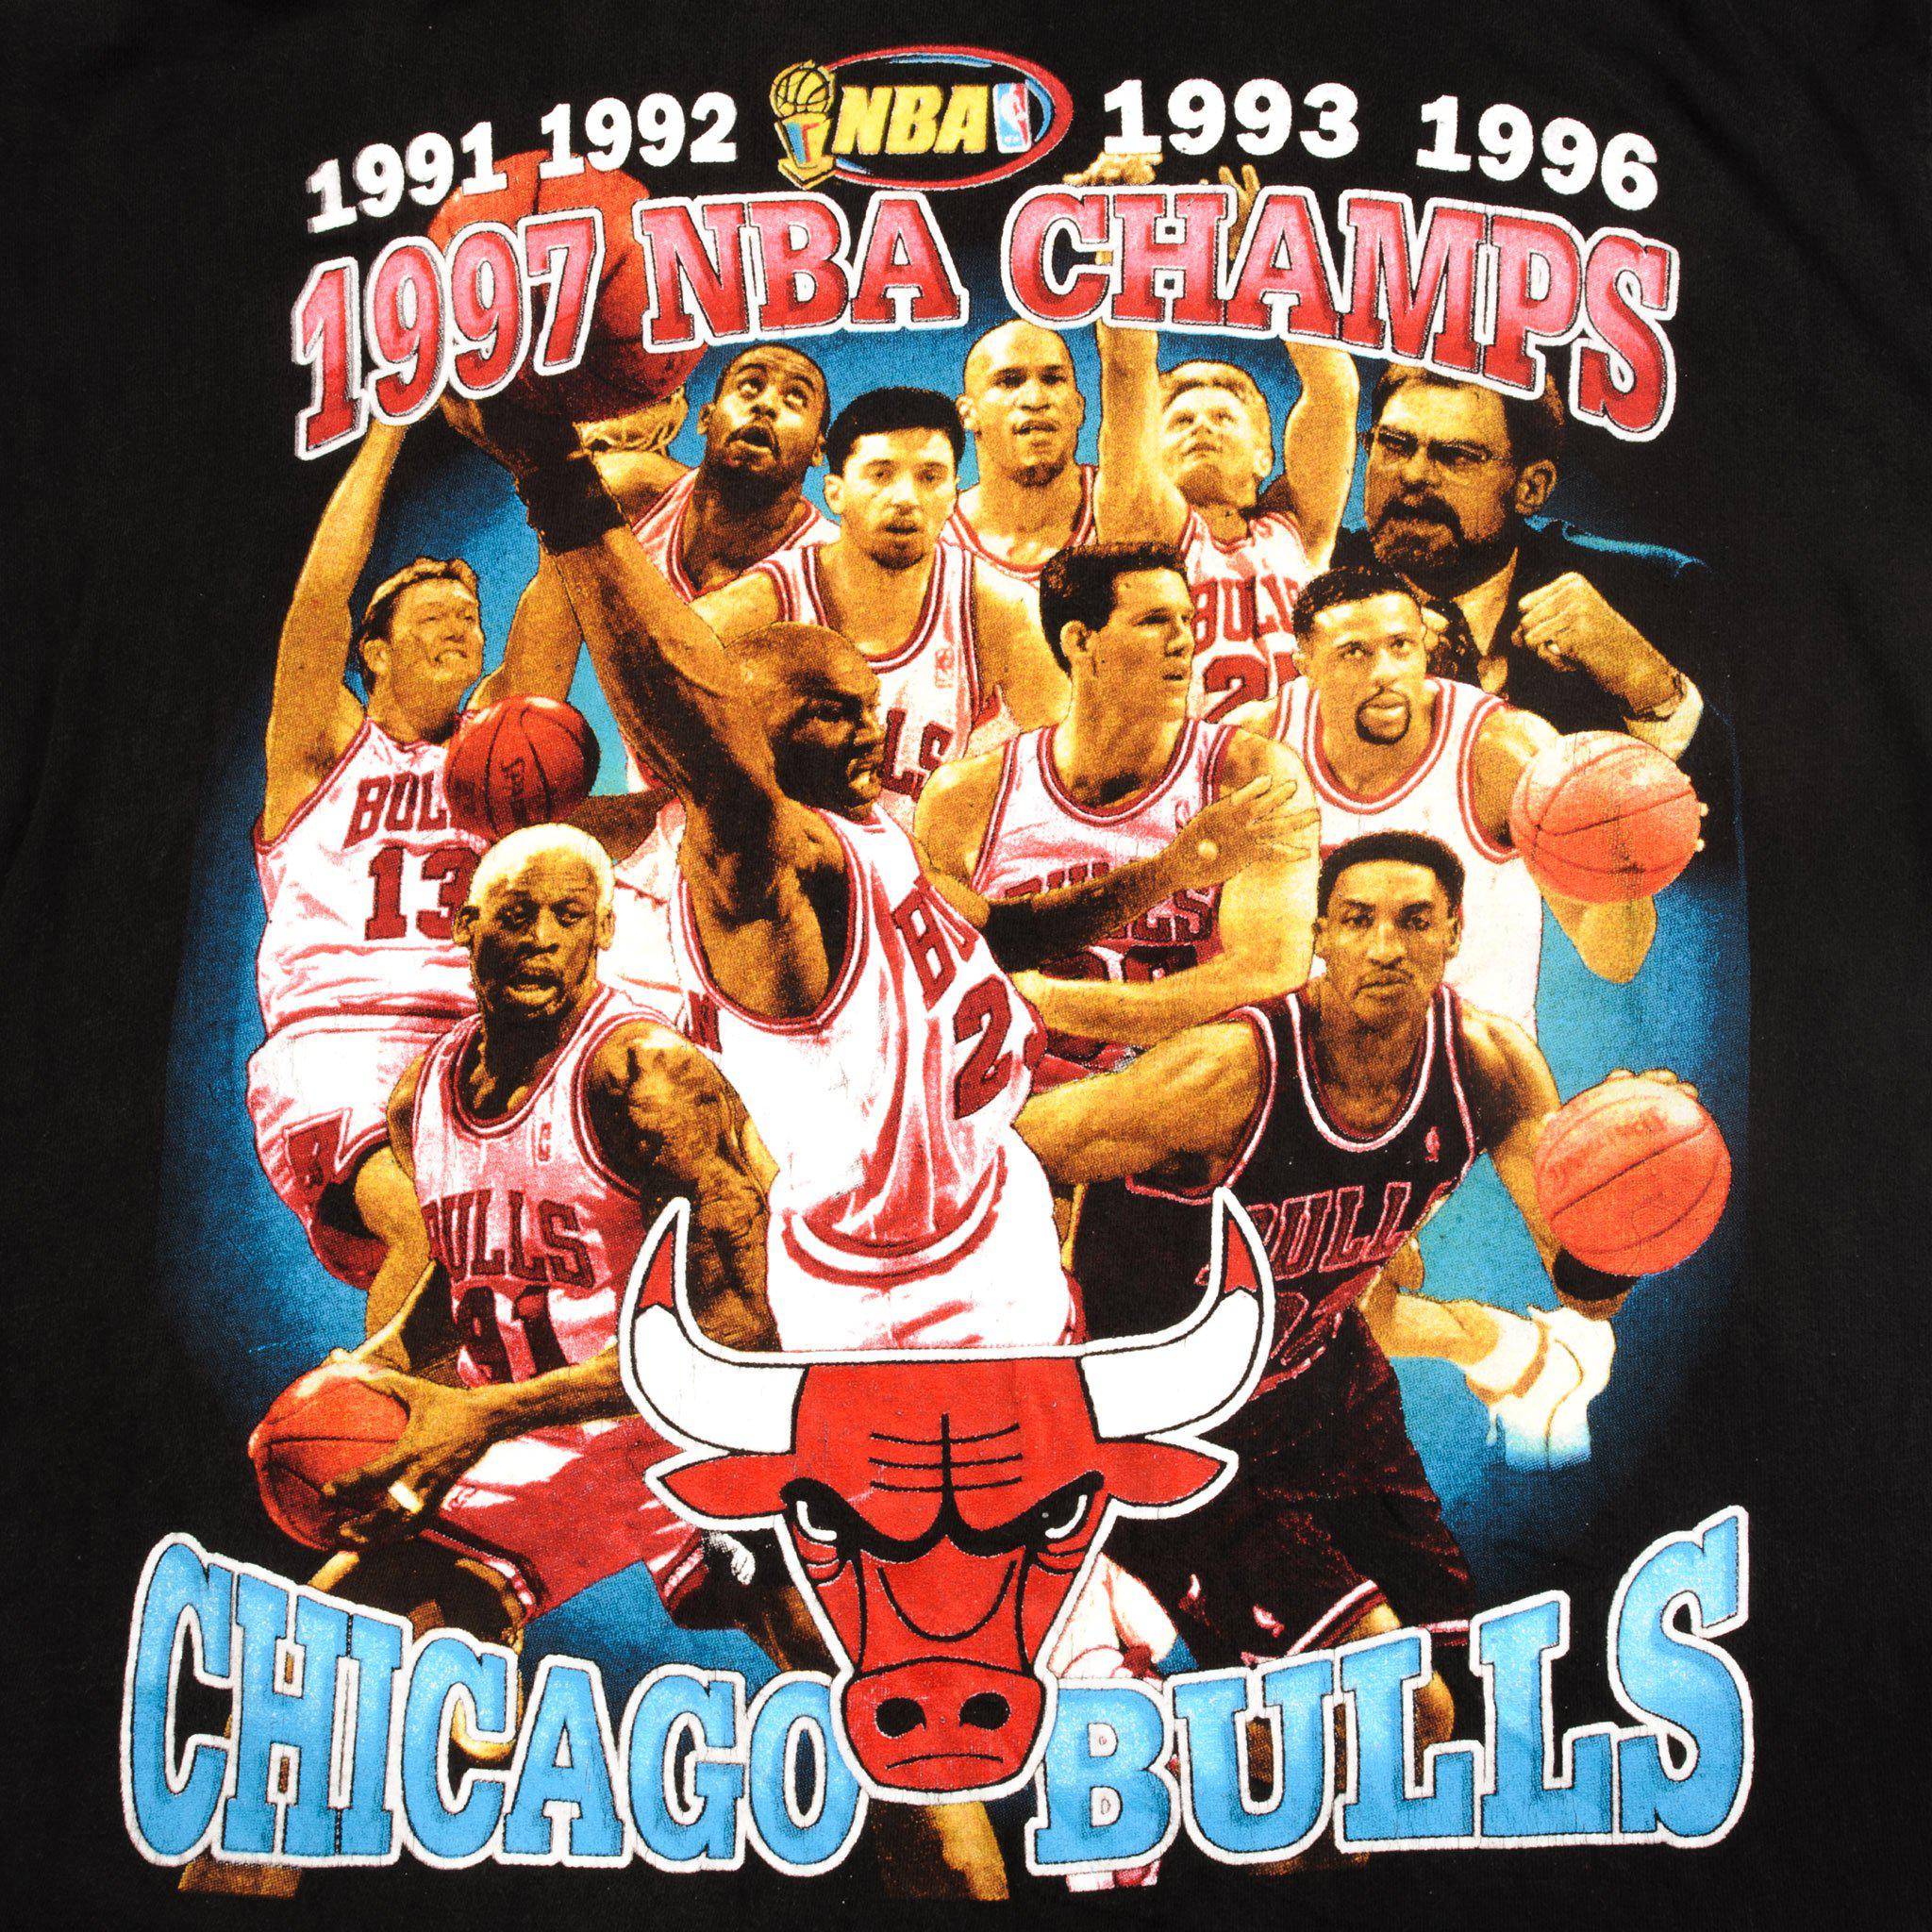 VINTAGE DEASTOCK NBA CHICAGO BULLS 1997 CHAMPIONS TEE SHIRT LARGE